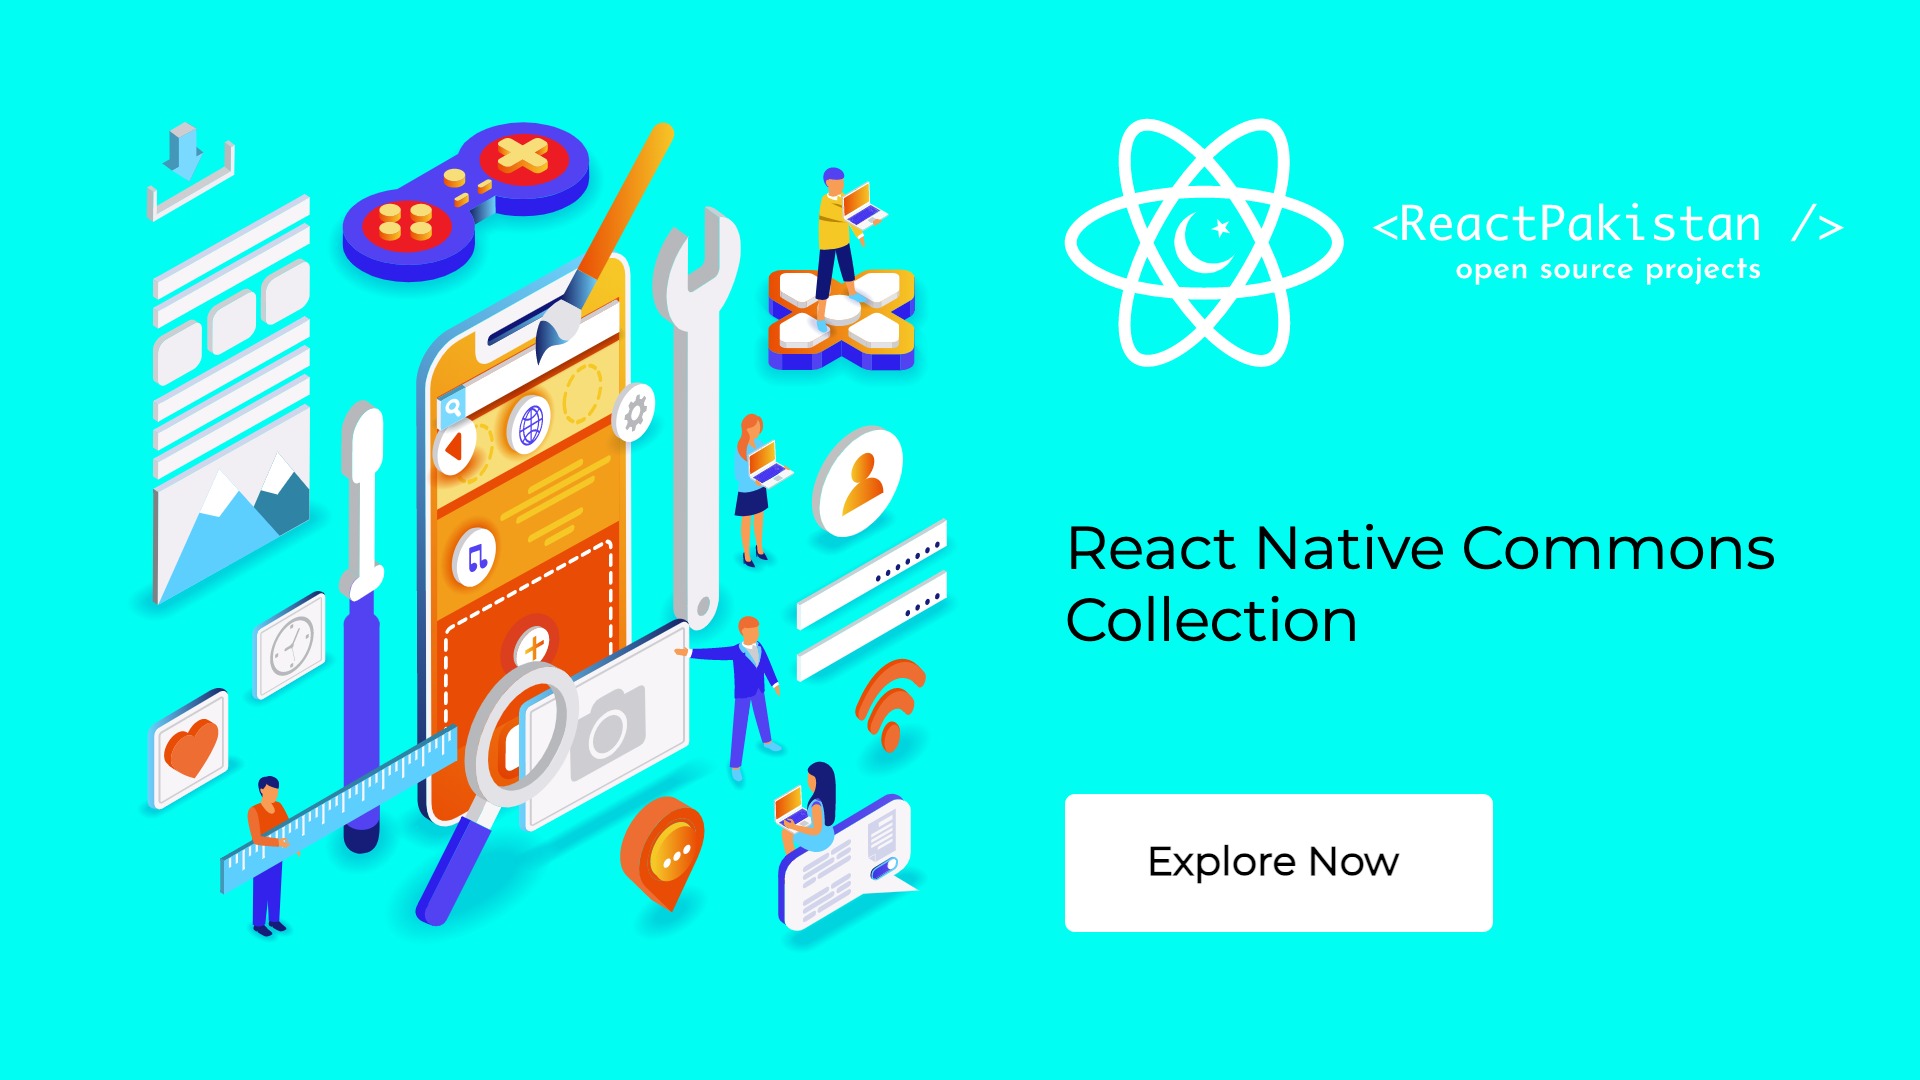 React Native Commons Collection - React Pakistan